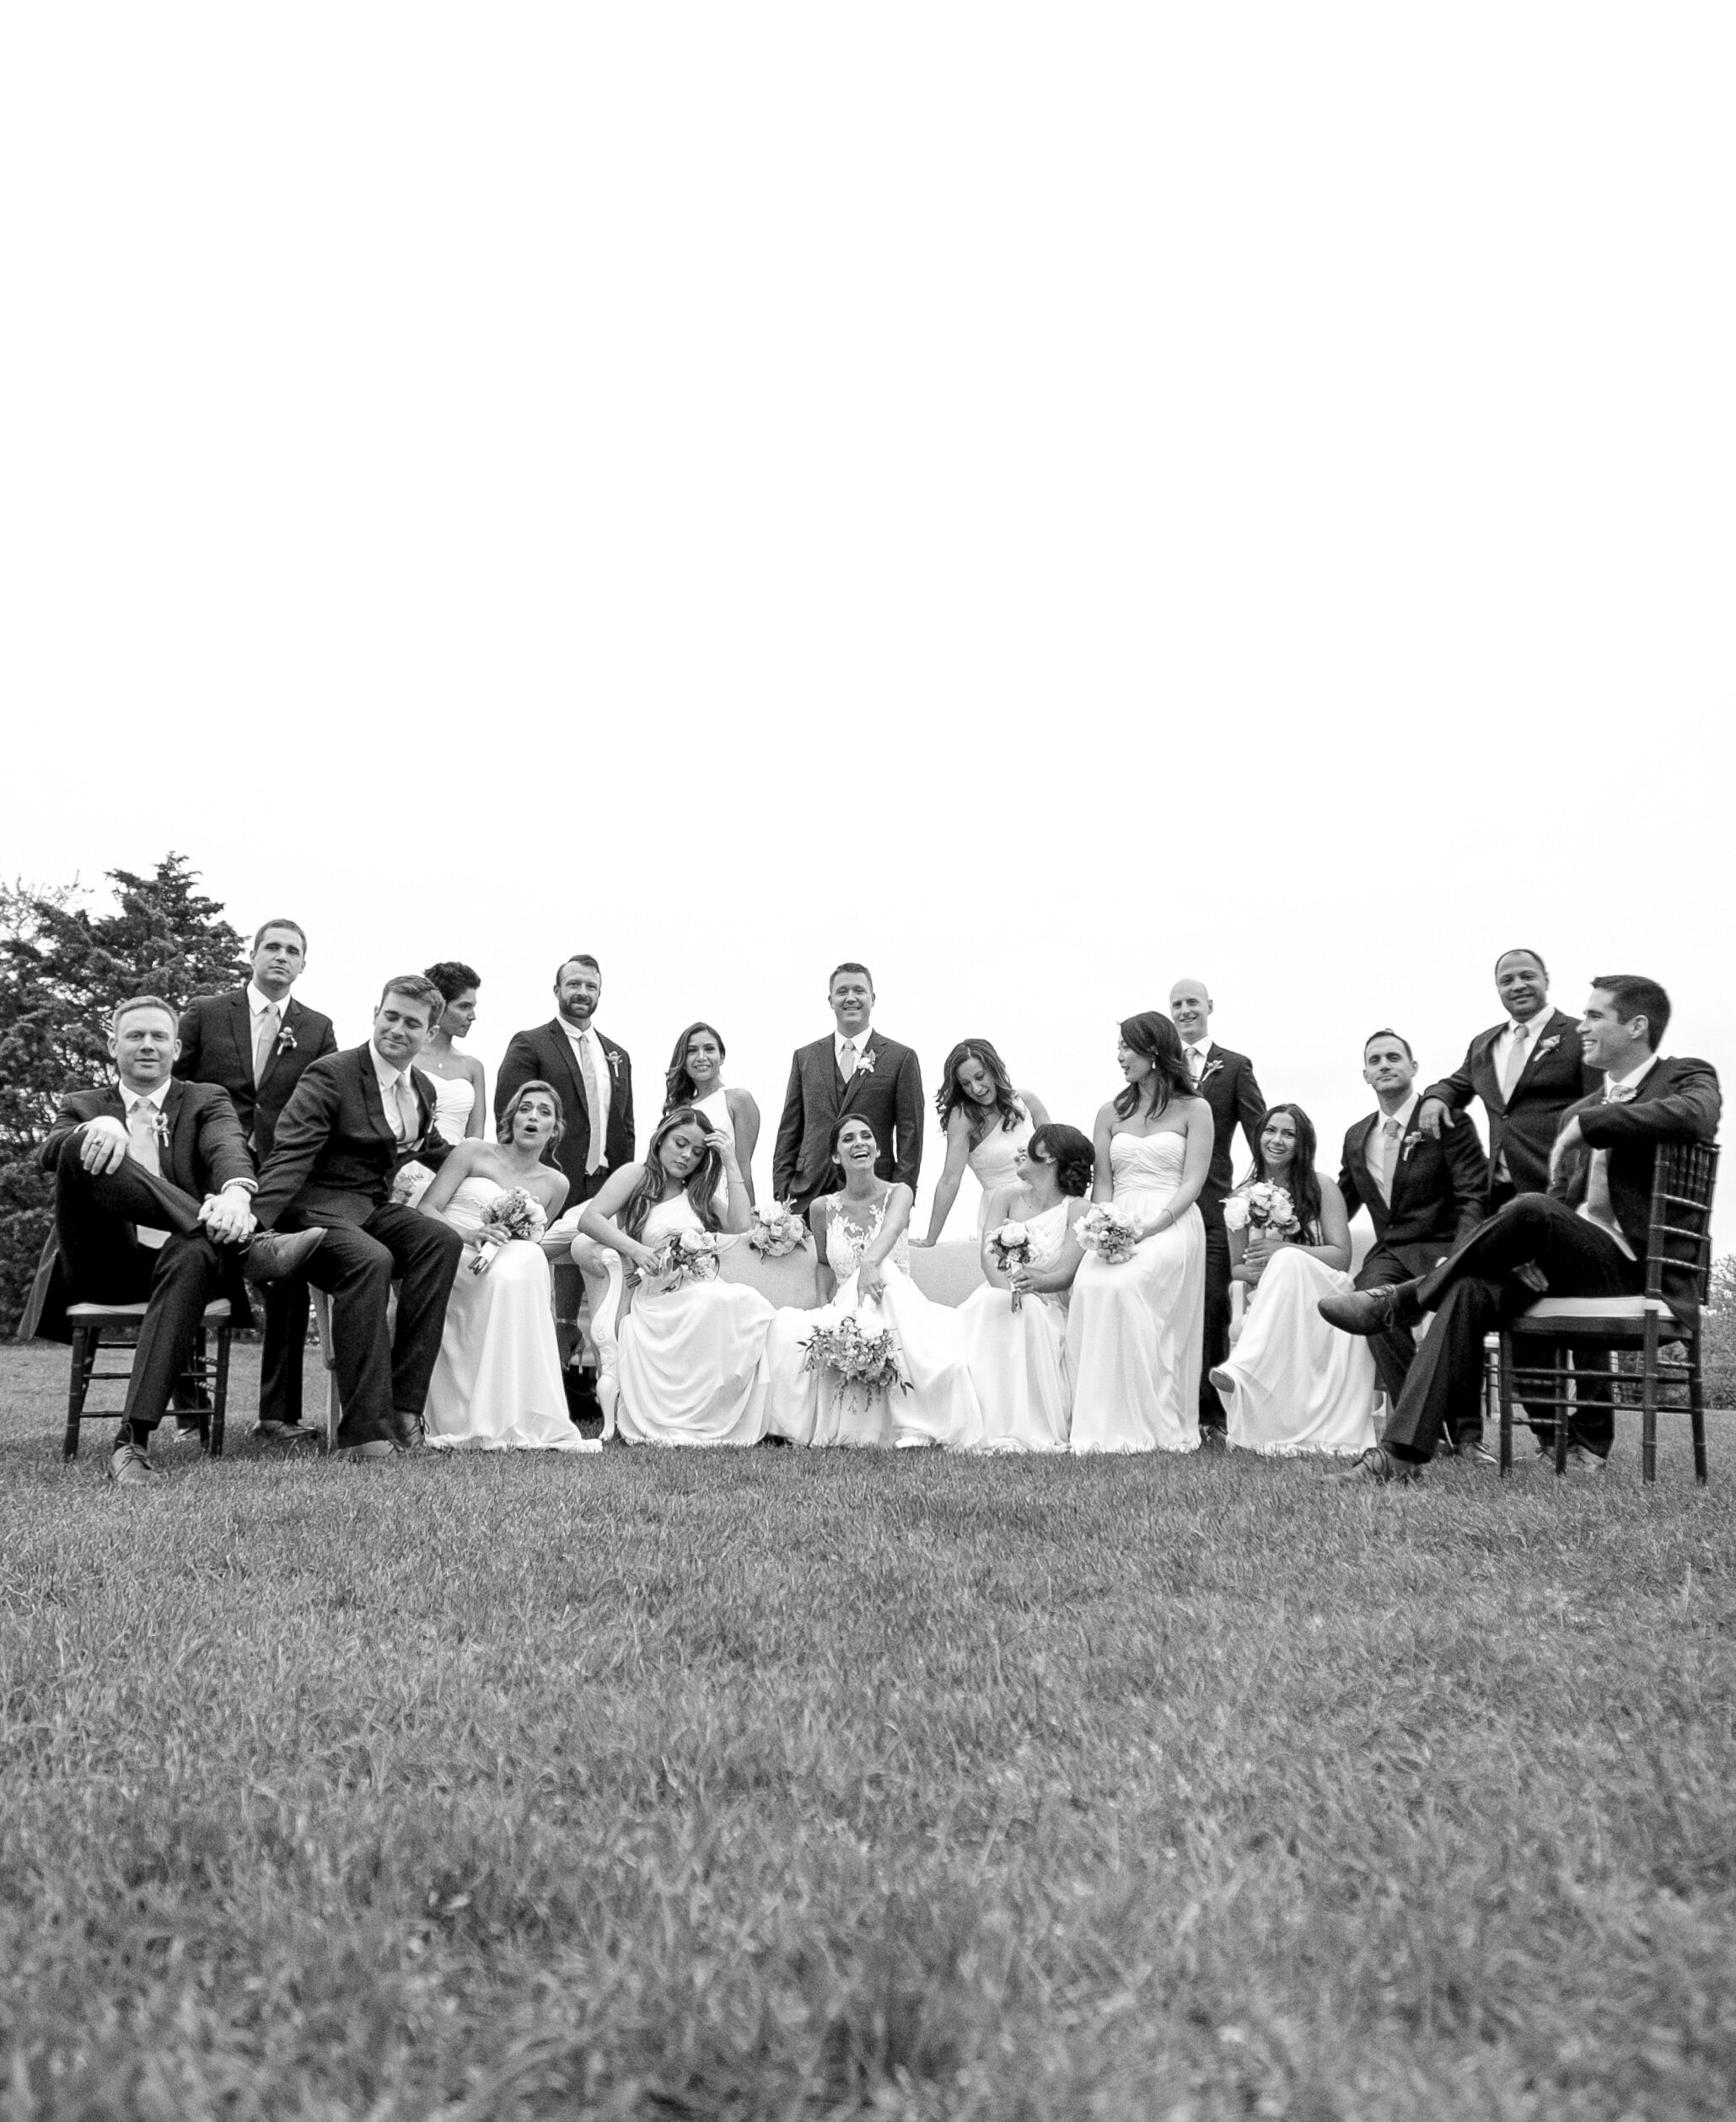 BRIDAL PARTY PHOTOGRAPH AT CASTLE HILL INN WEDDING